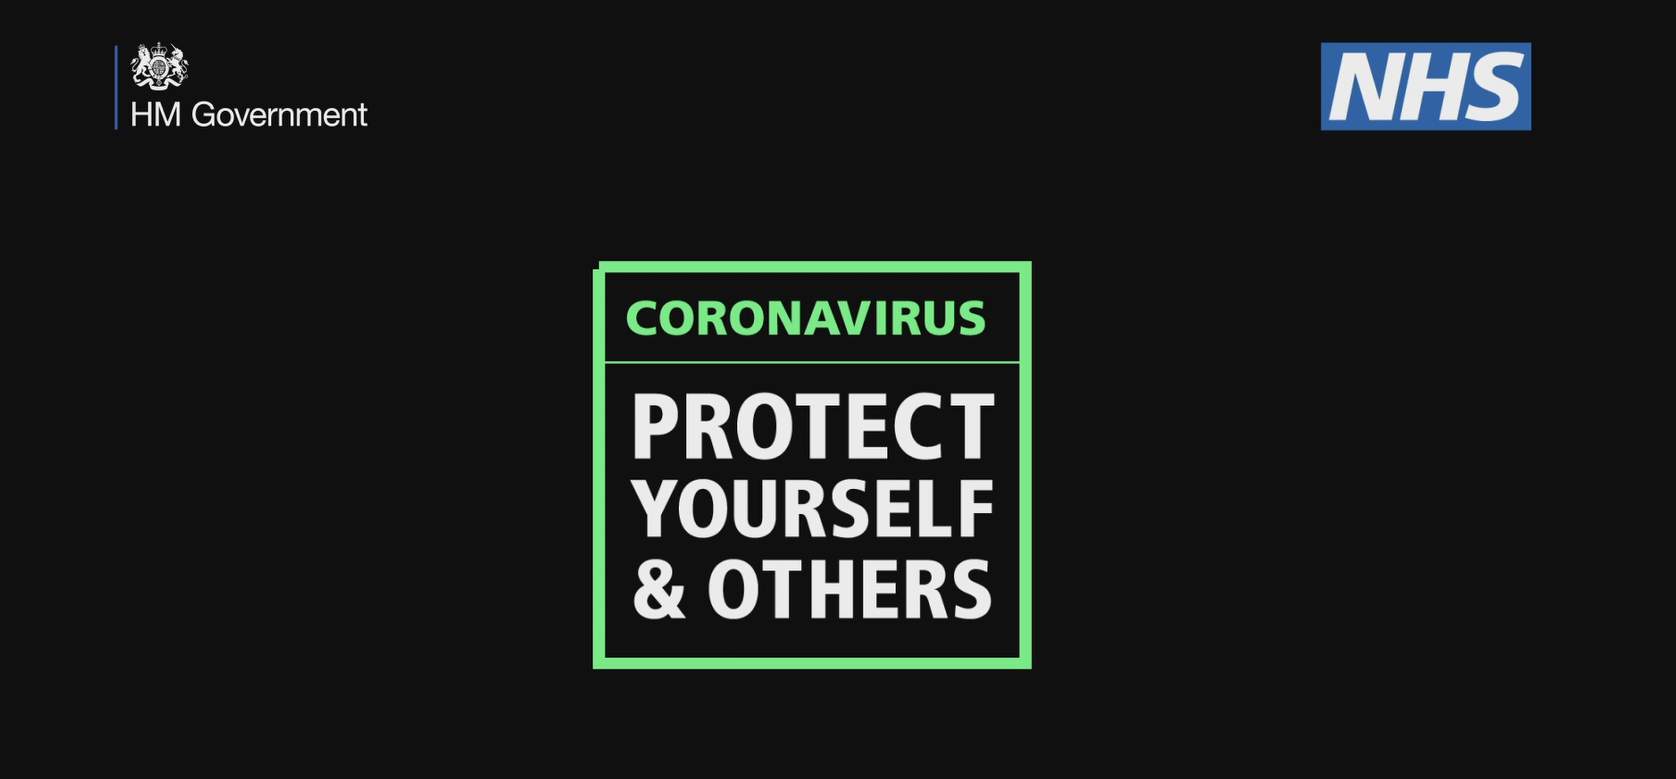 Statement on coronavirus (COVID-19) cases in Dorset.